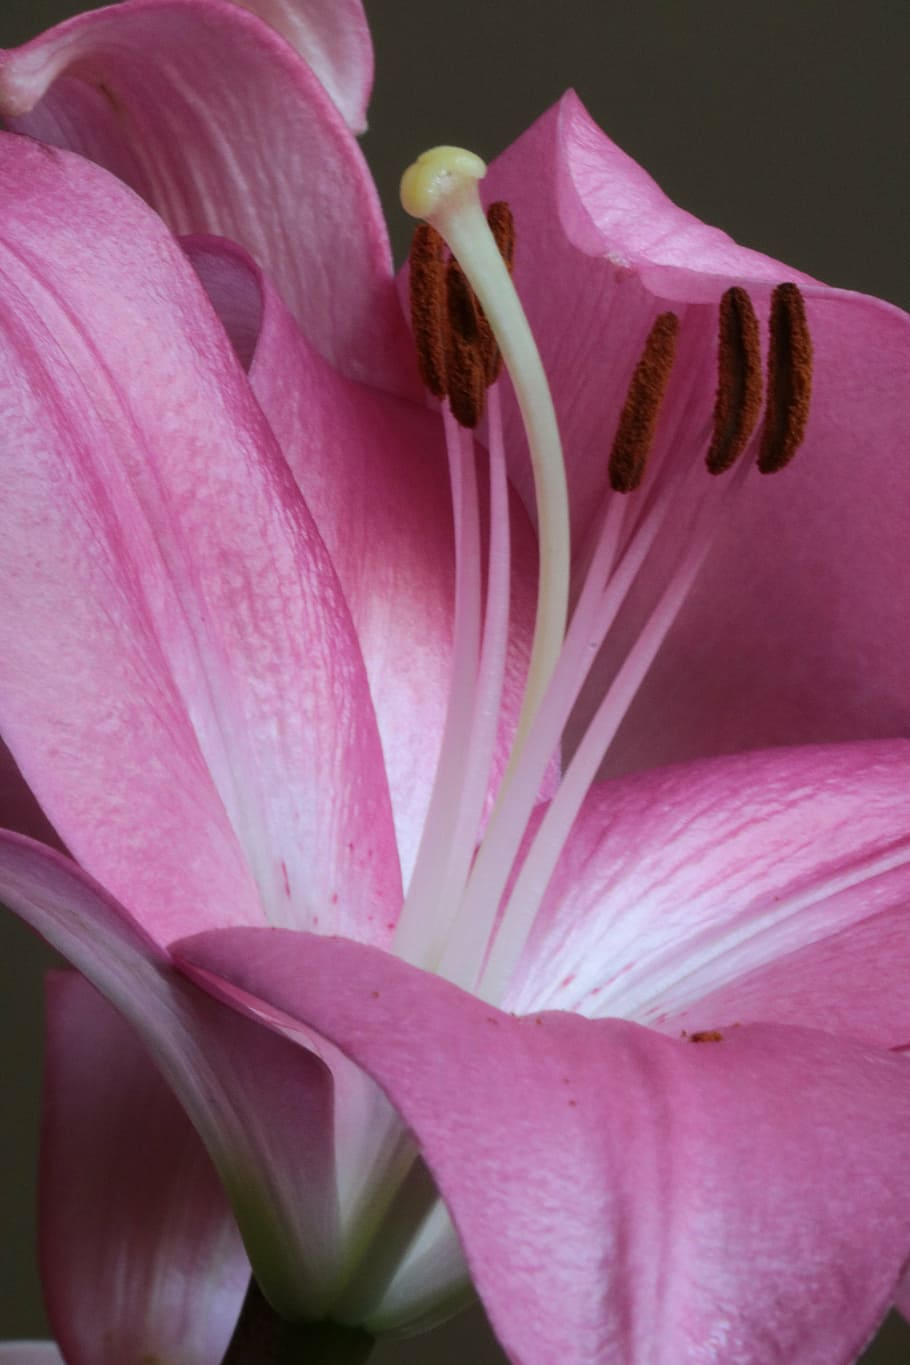 HD wallpaper: lily, pink, pistil, flower, stamens, flowering plant, vulnera...